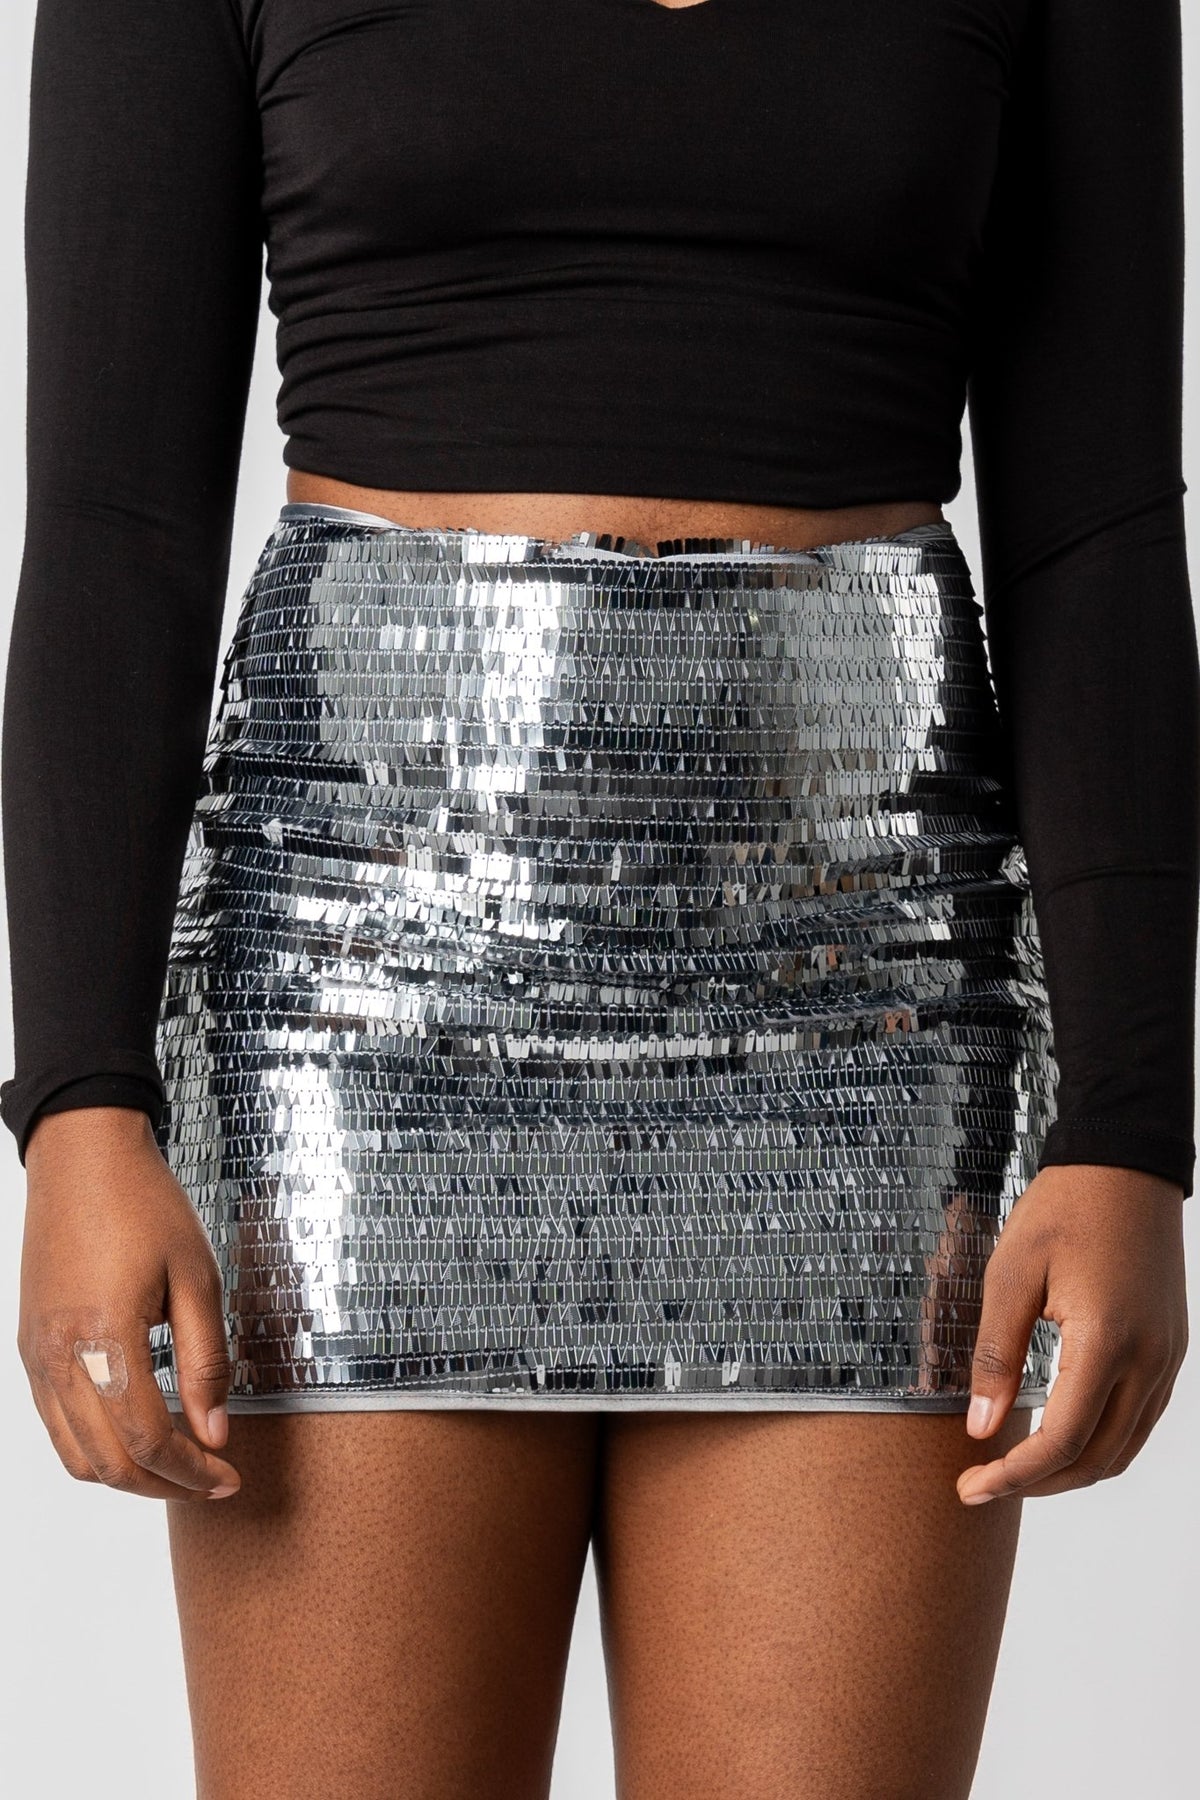 Sequin skirt gunmetal | Lush Fashion Lounge: boutique fashion skirts, affordable boutique skirts, cute affordable skirts